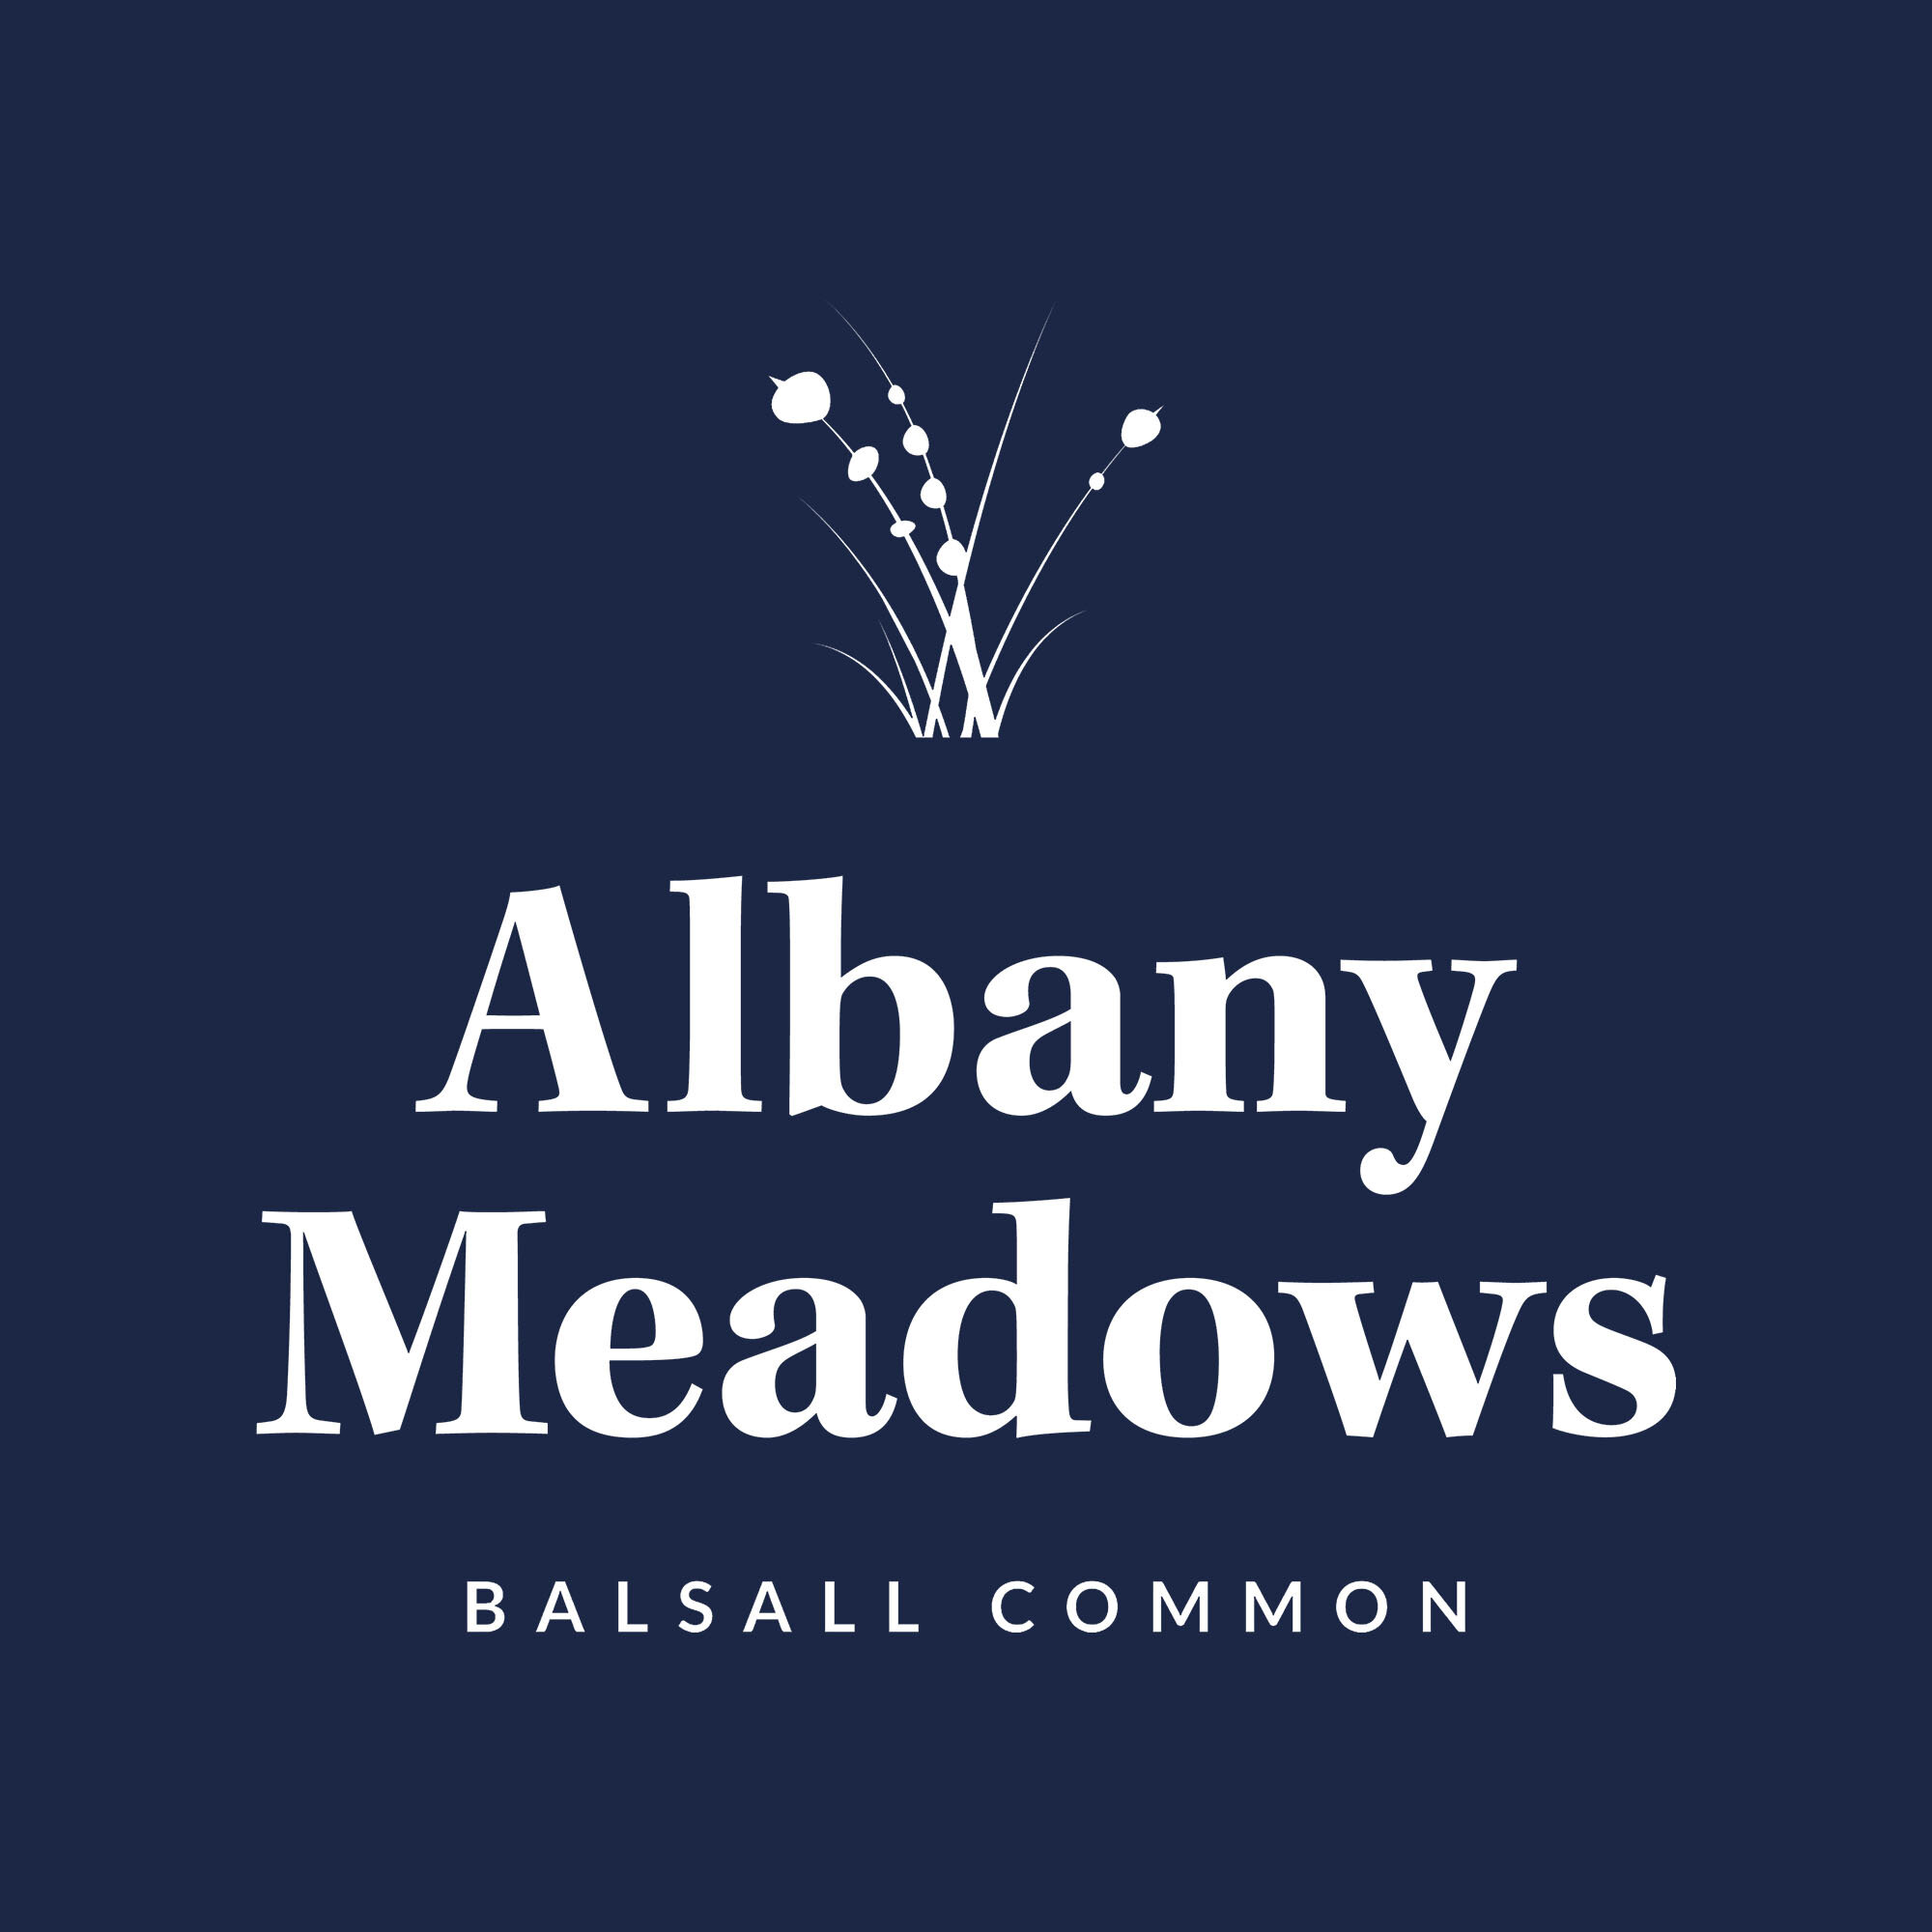 Albany meadows II.jpg